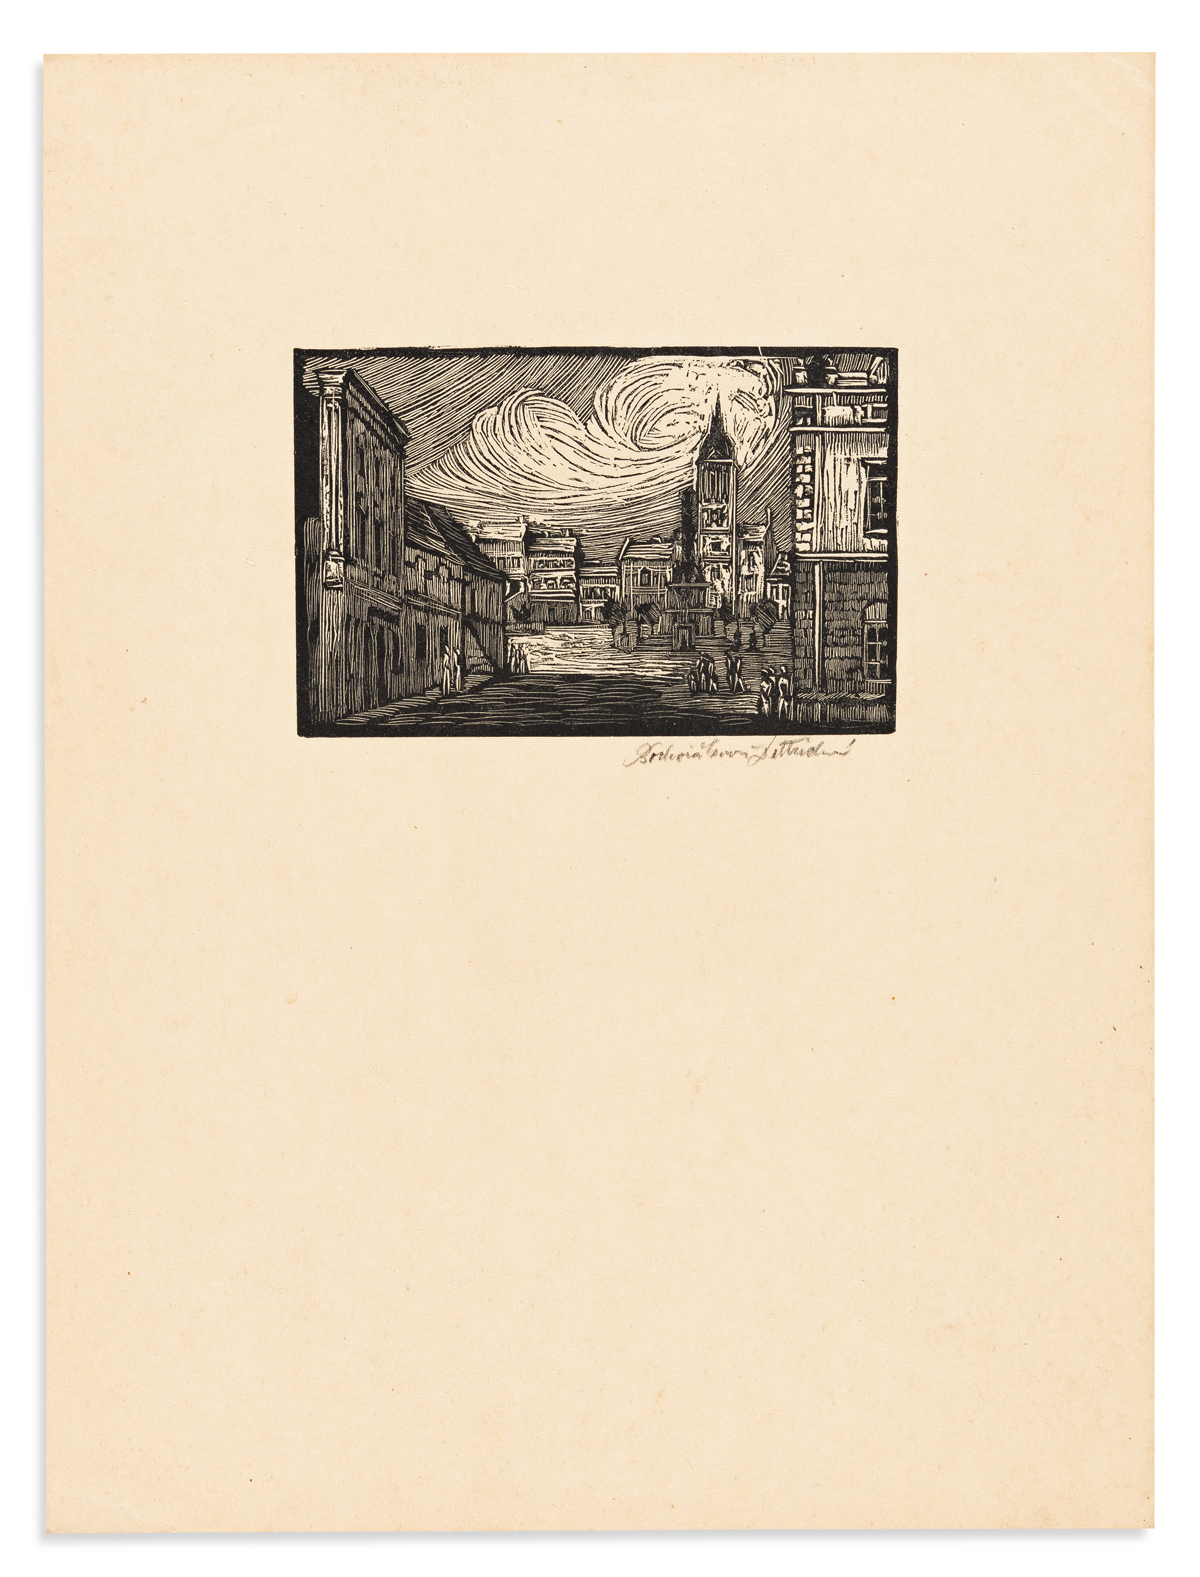 Bochoráková-Dittrichová, Helena (1894-1980) Illustrated Books & Prints: a Small Archive with Signed Material.